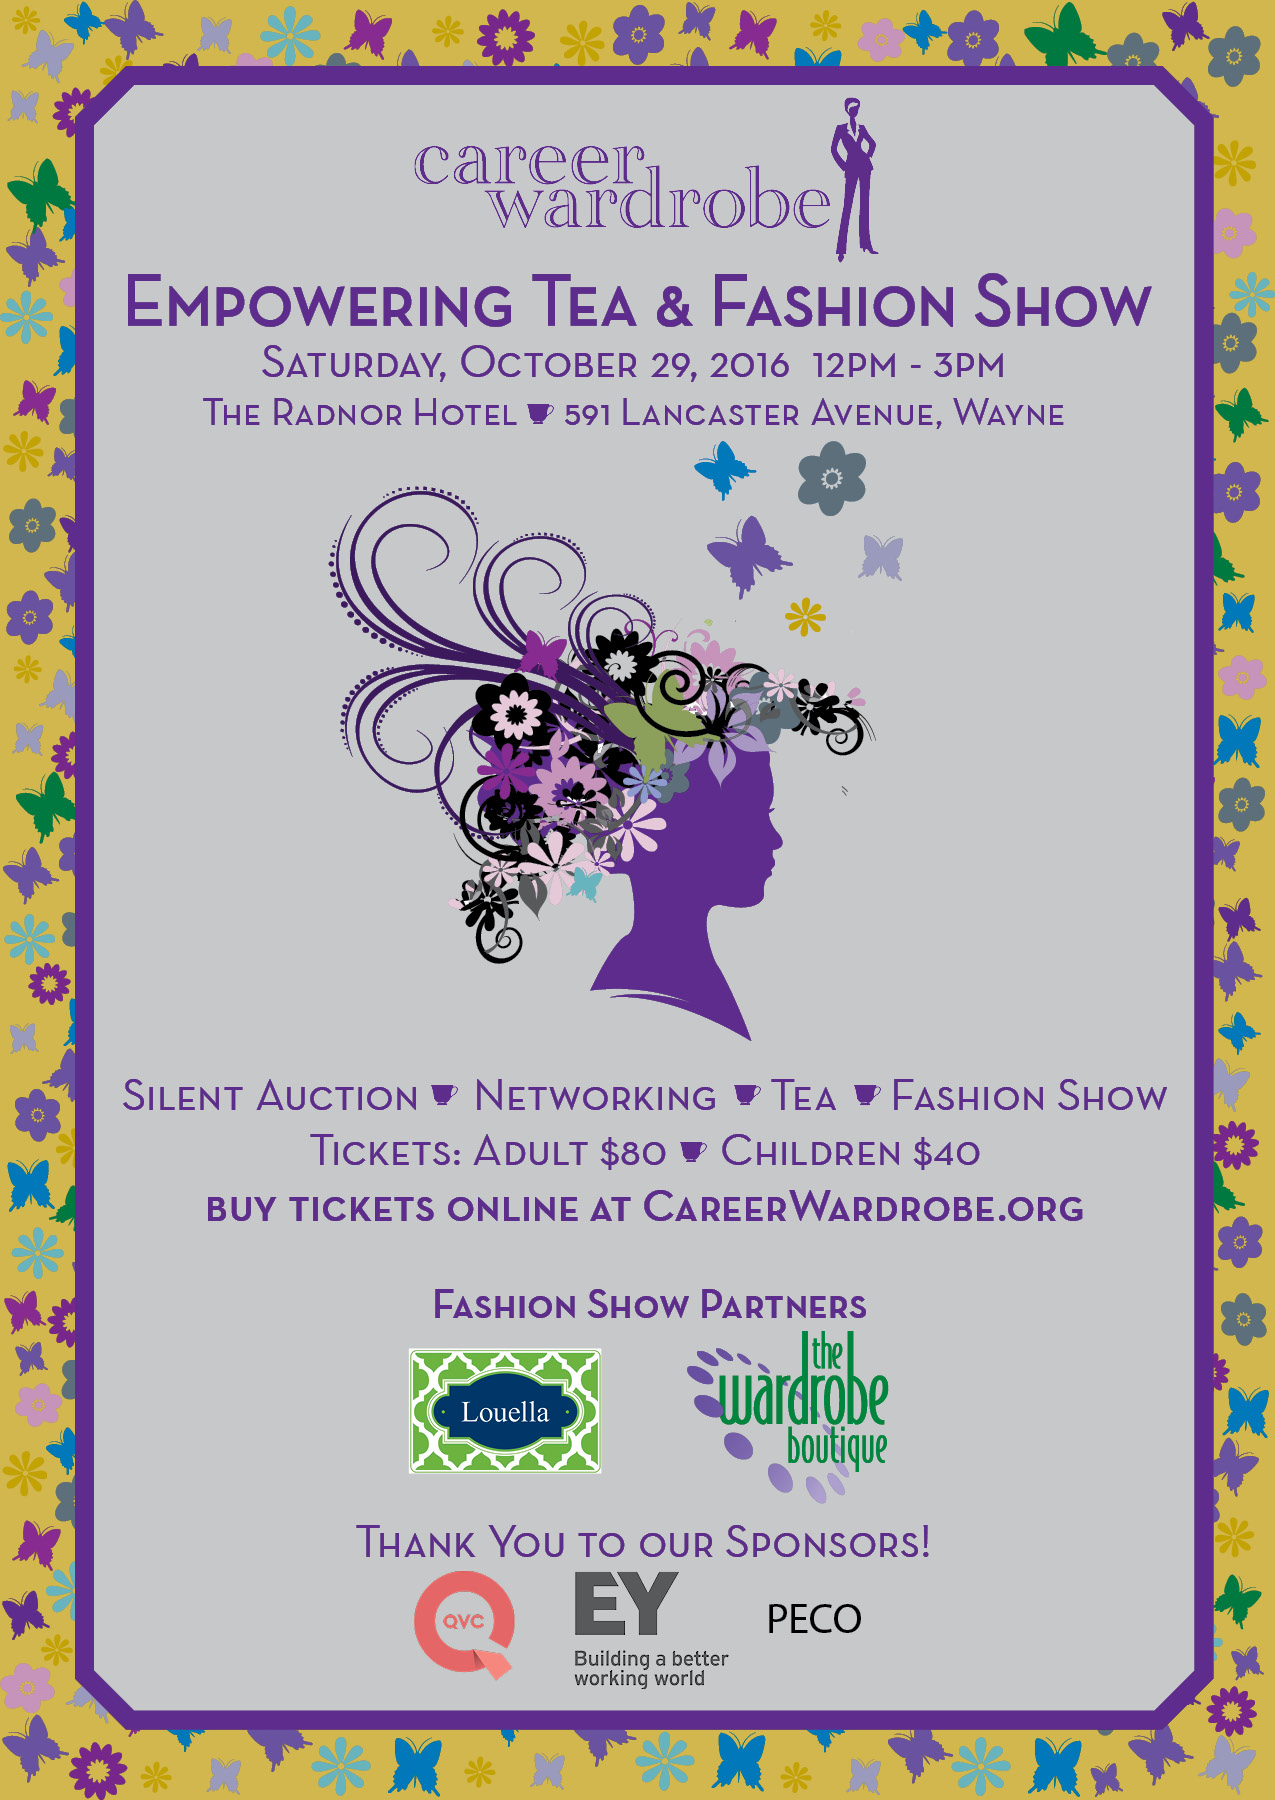 Career Wardrobe Empowering Tea & Fashion Show